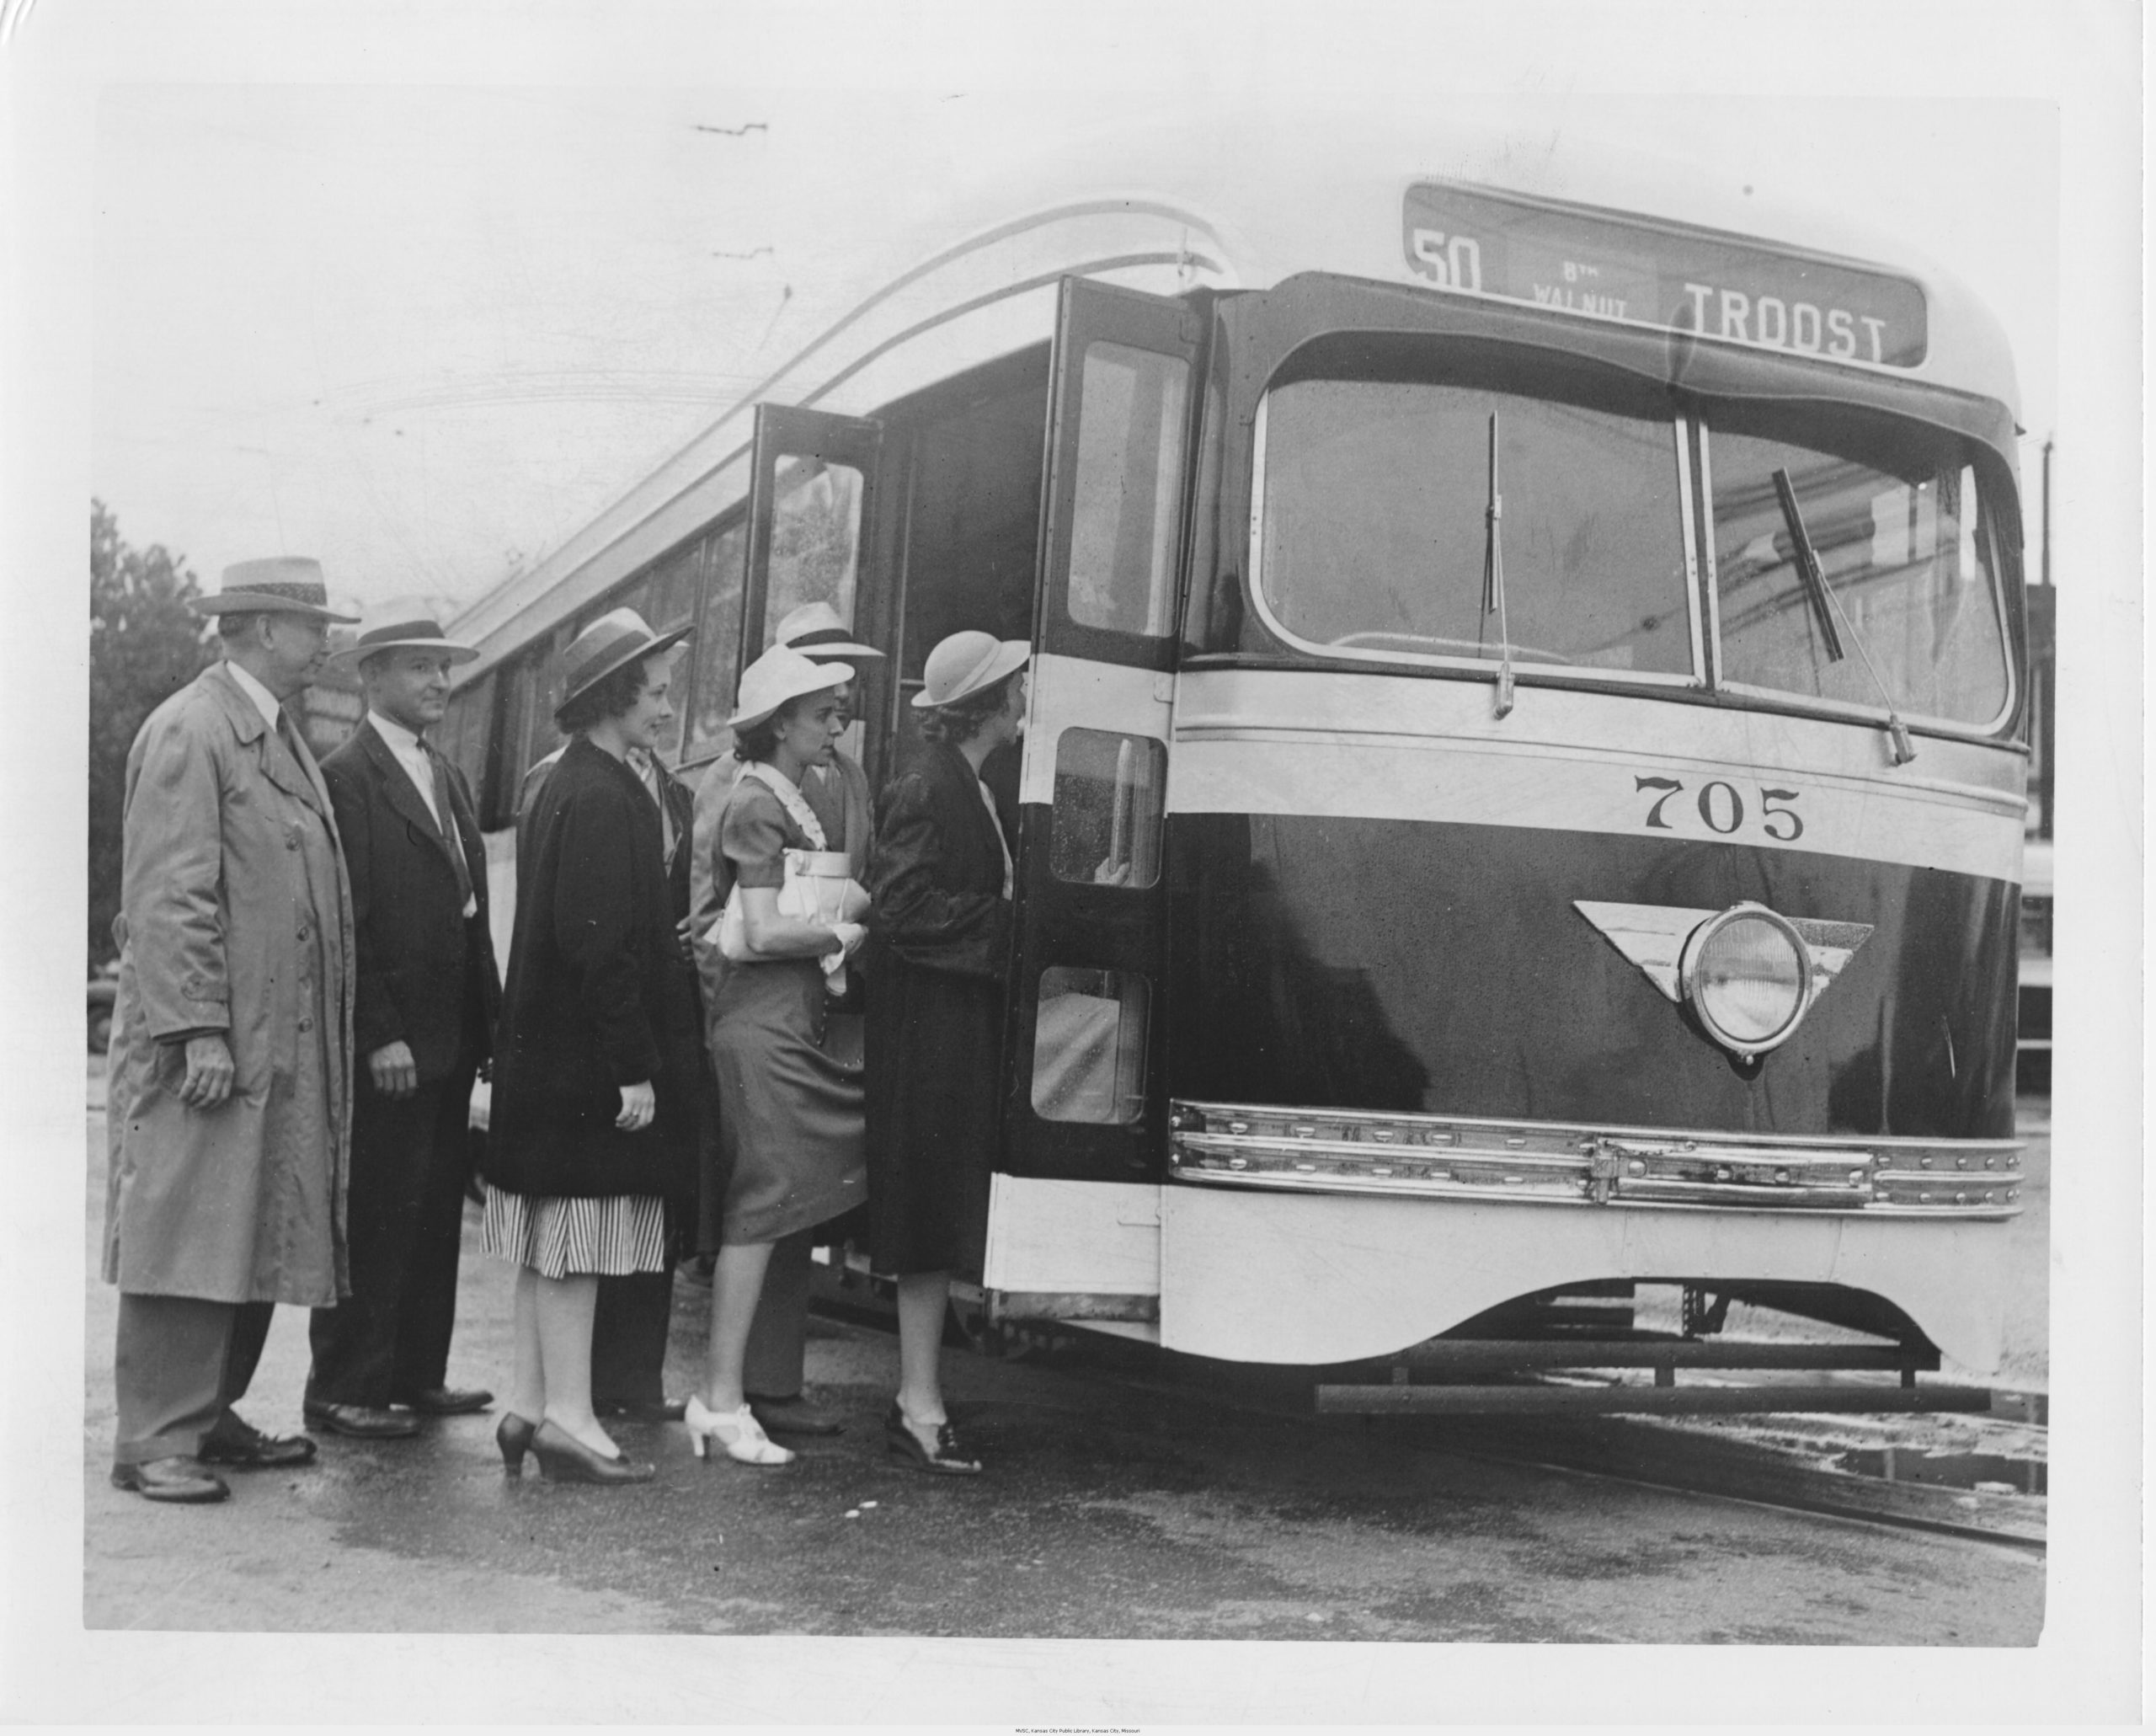 Streetcar passengers in 1940s